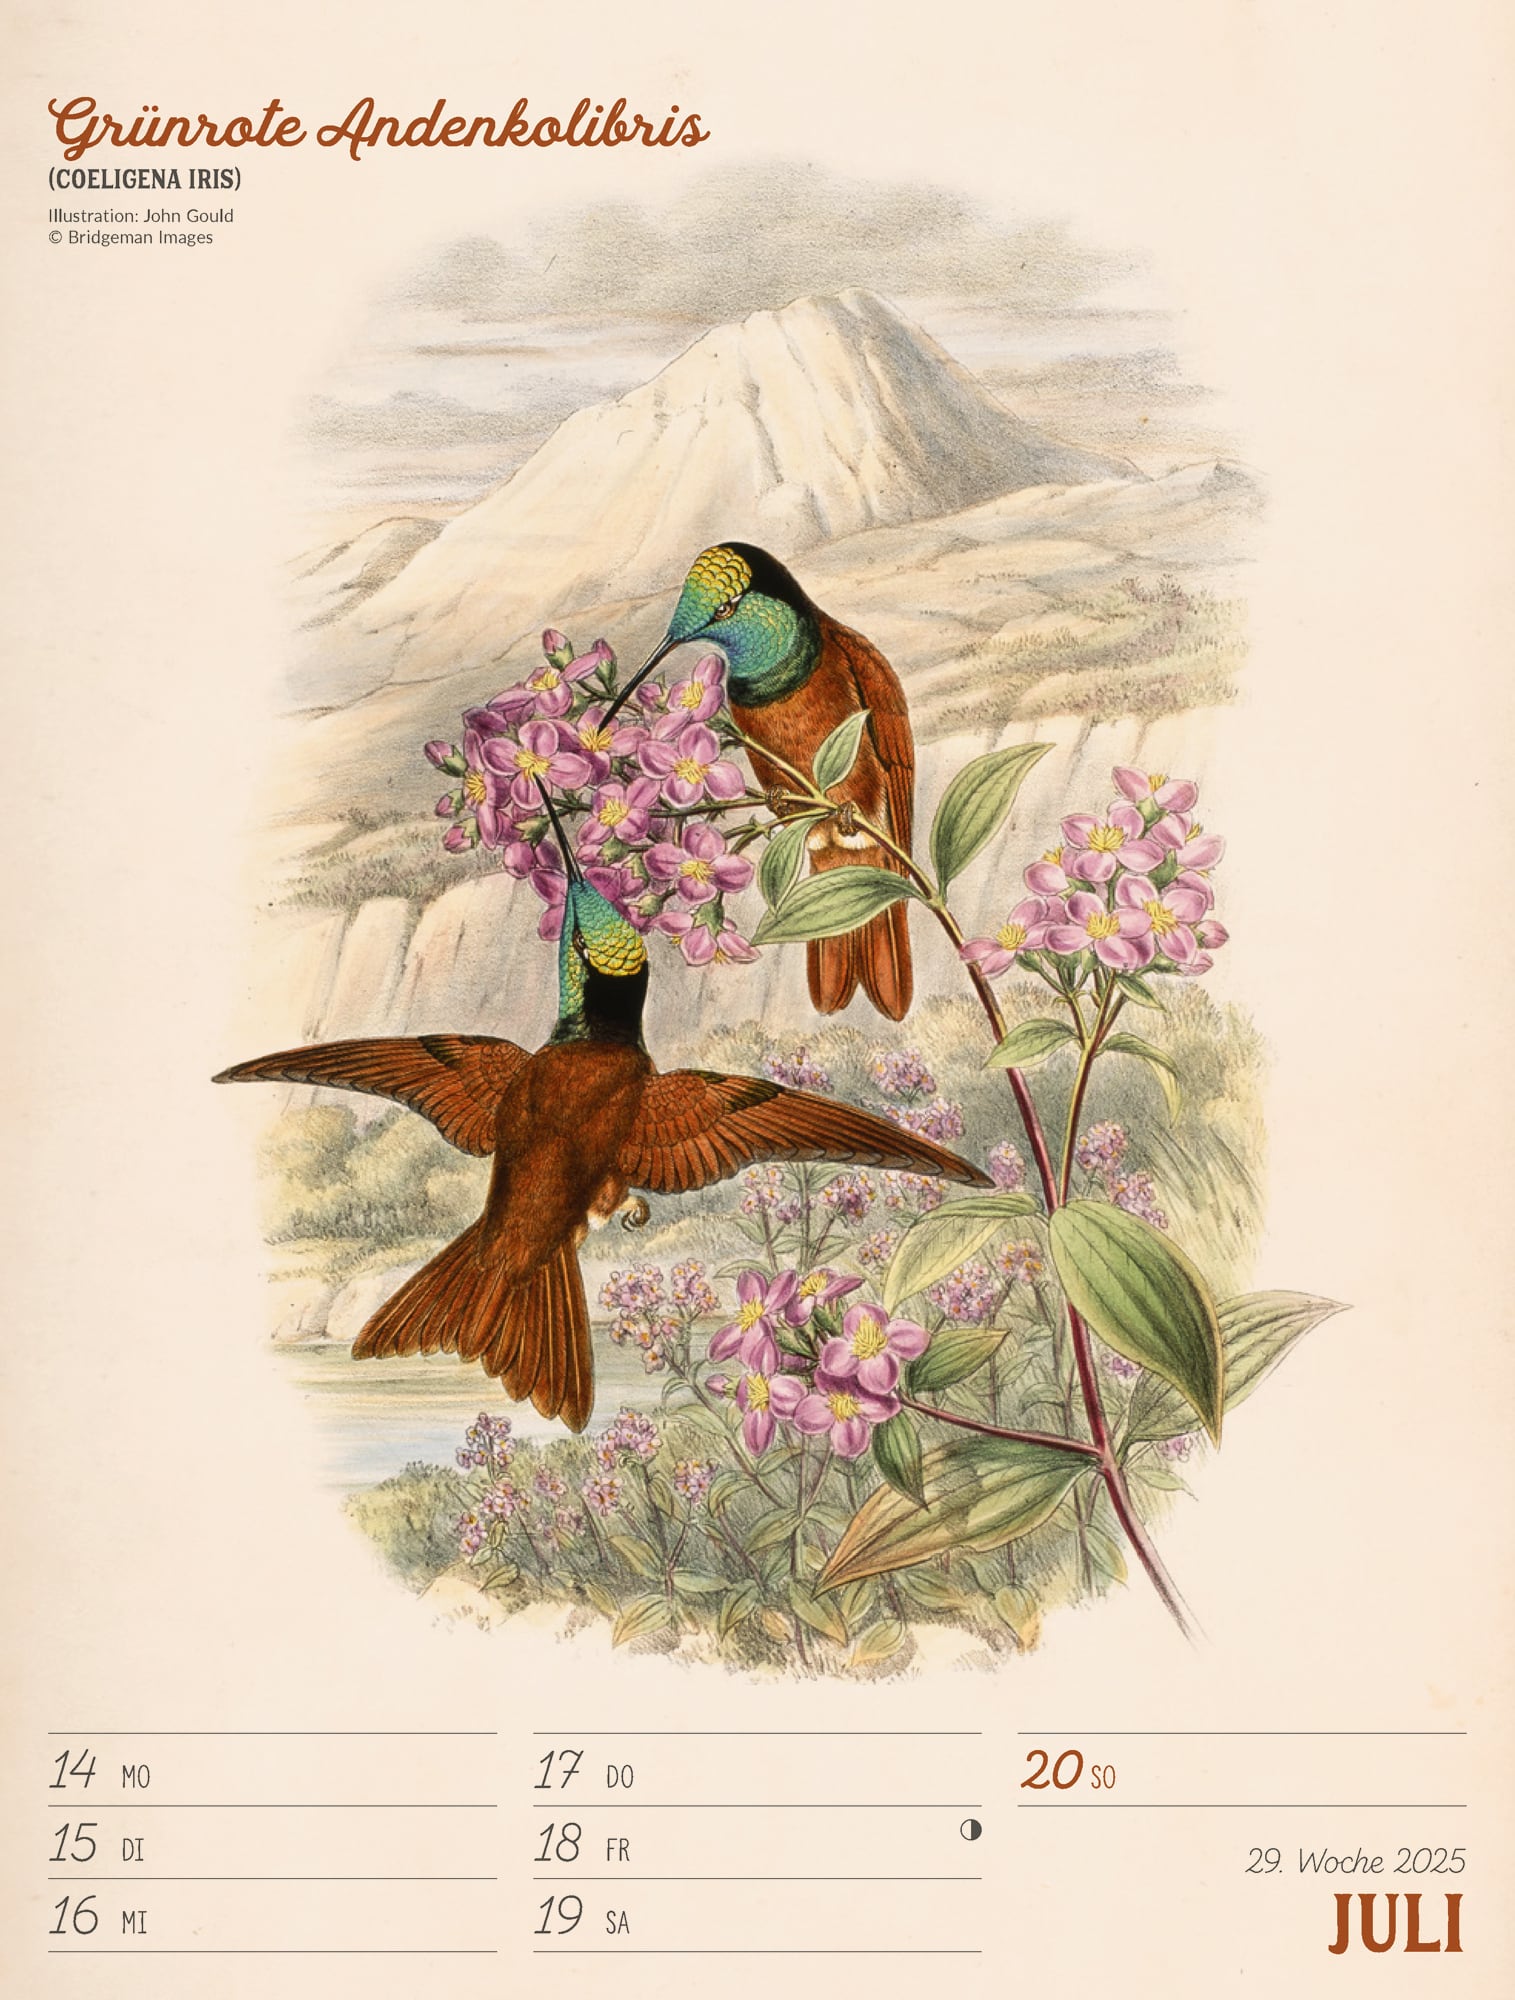 Ackermann Calendar The wonderful World of Birds 2025 - Weekly Planner - Inside View 32